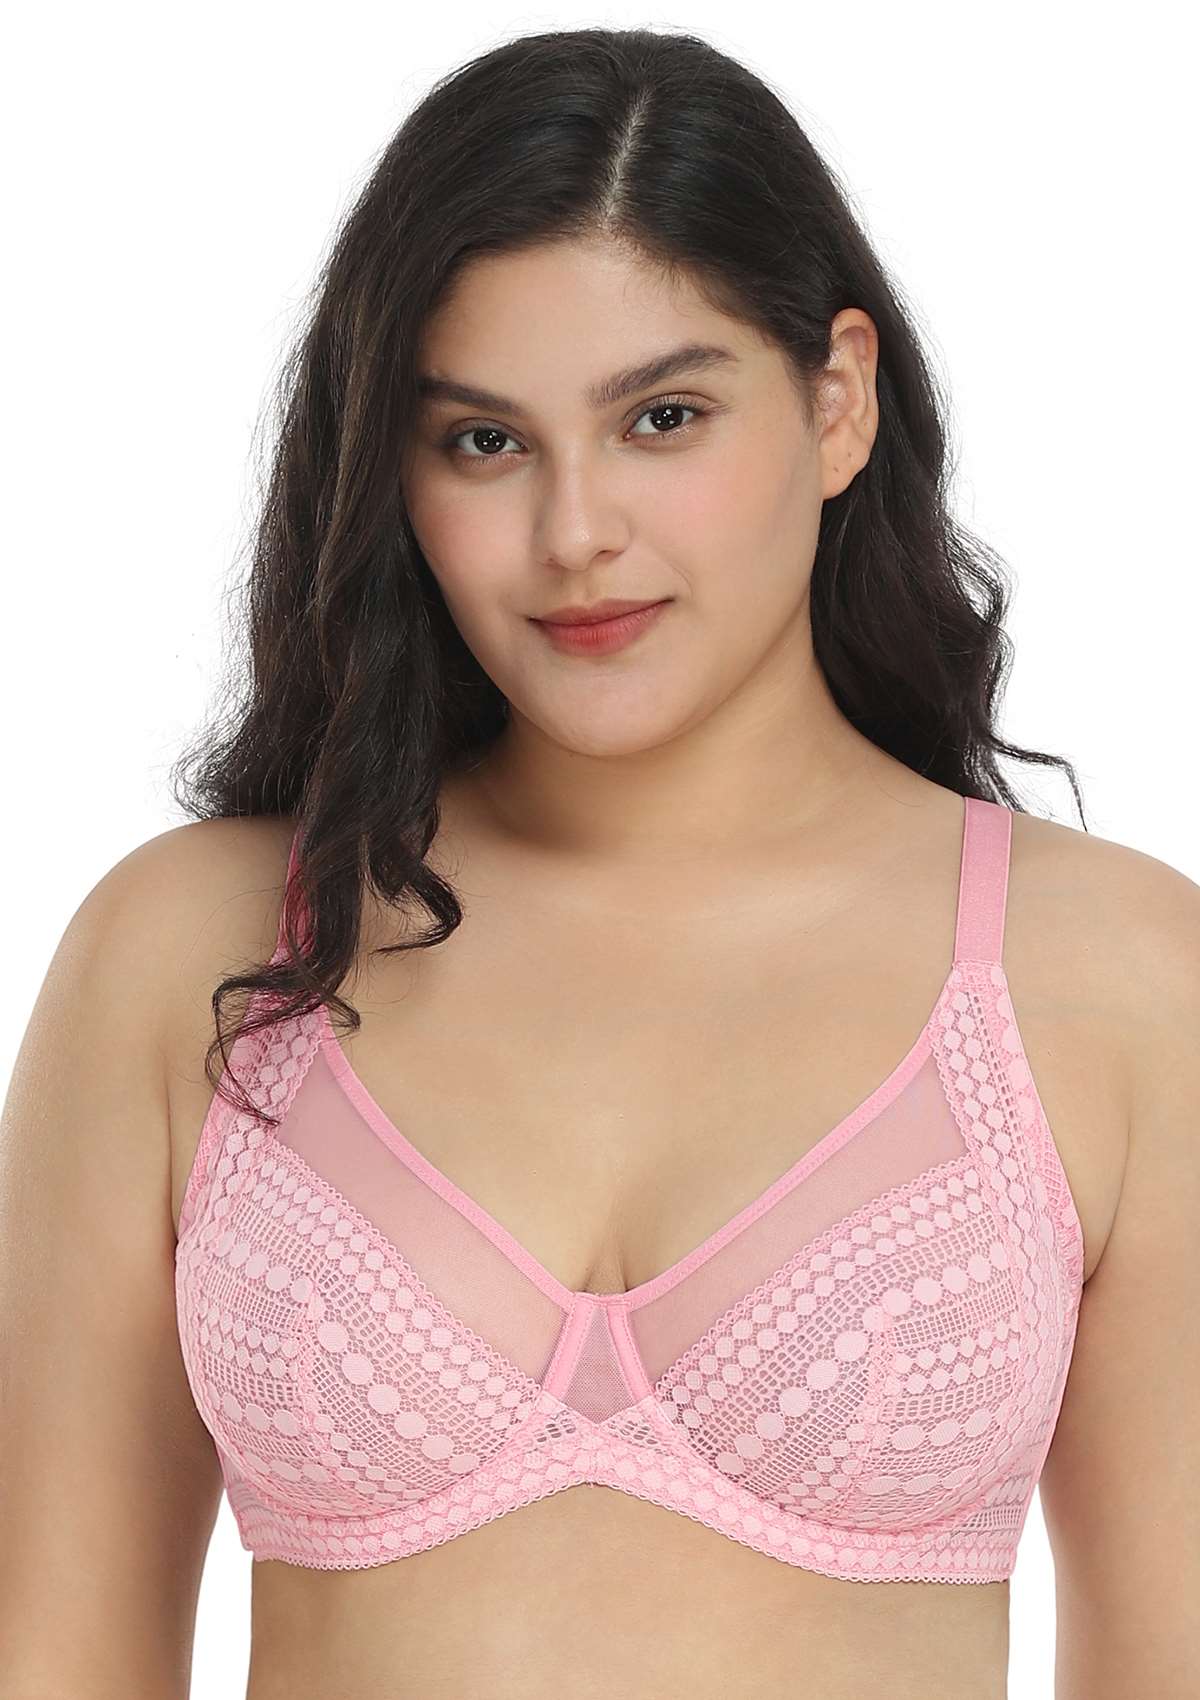 HSIA Heroine Lace Unlined Bra: Bra That Hides Back Fat - Plus Size - Pink / 42 / DD/E